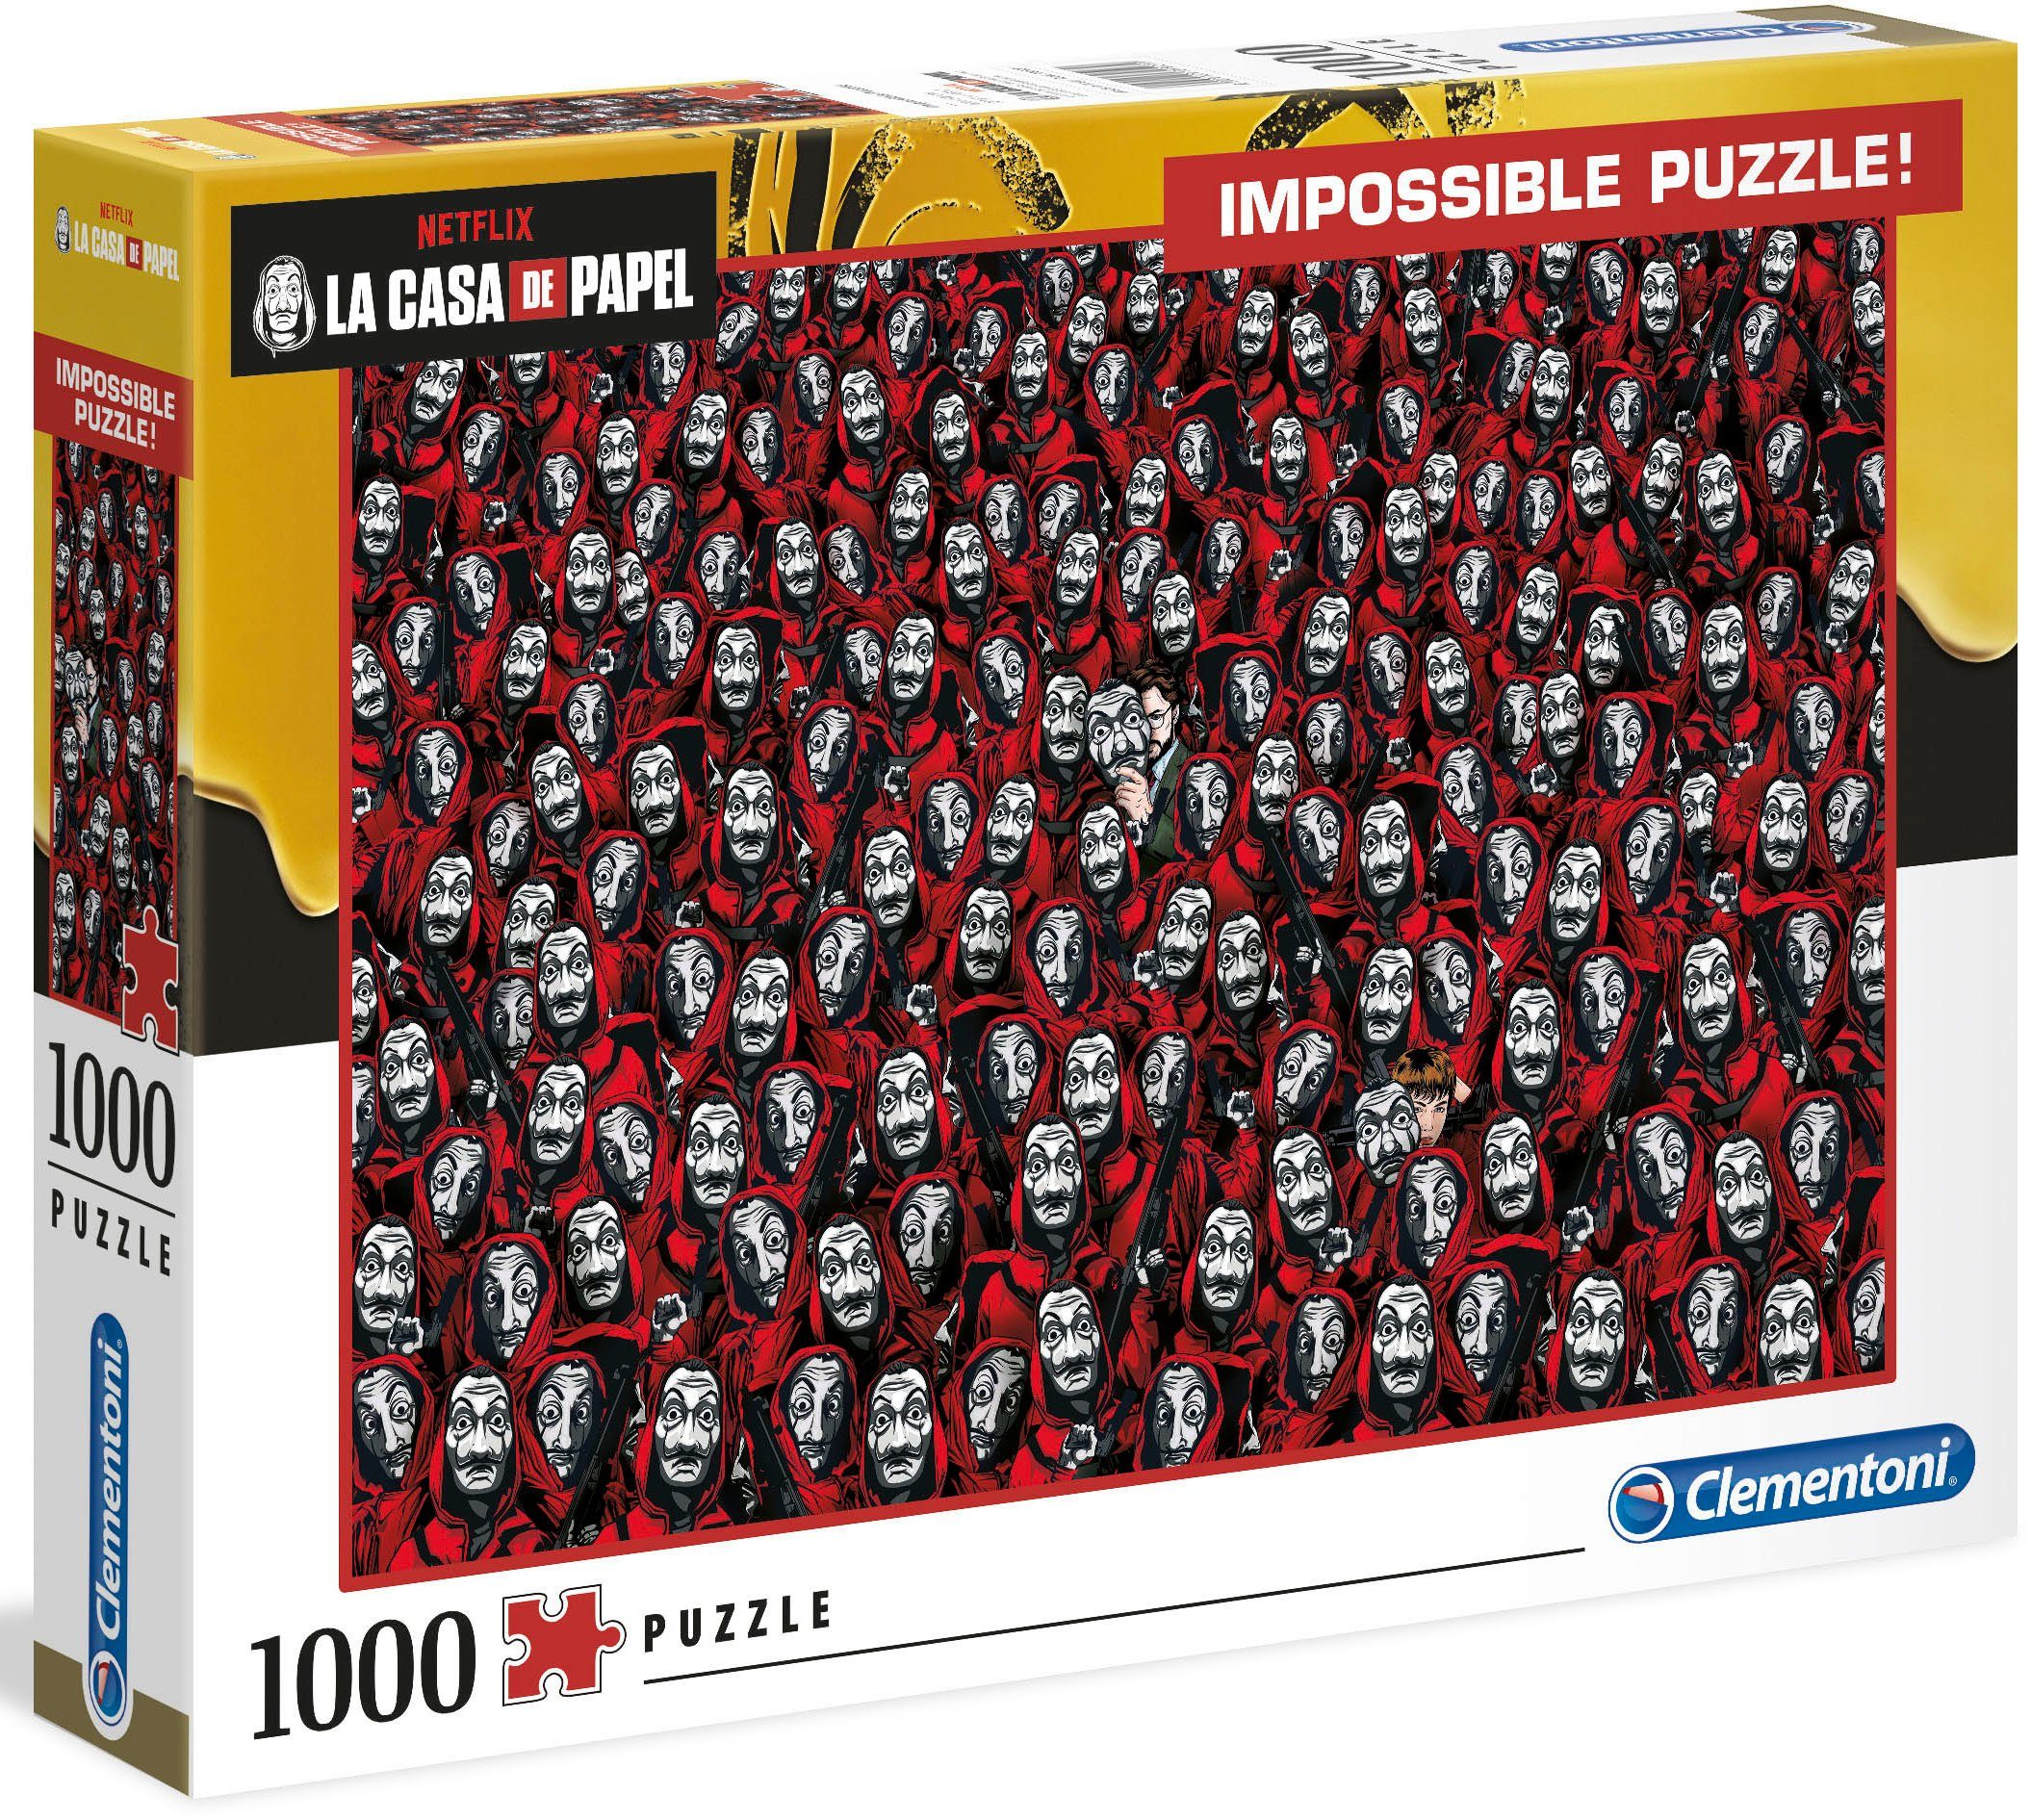 Clementoni® Puzzle Das Collection, Haus Europe in Impossible 1000 Puzzleteile, des Made Geldes